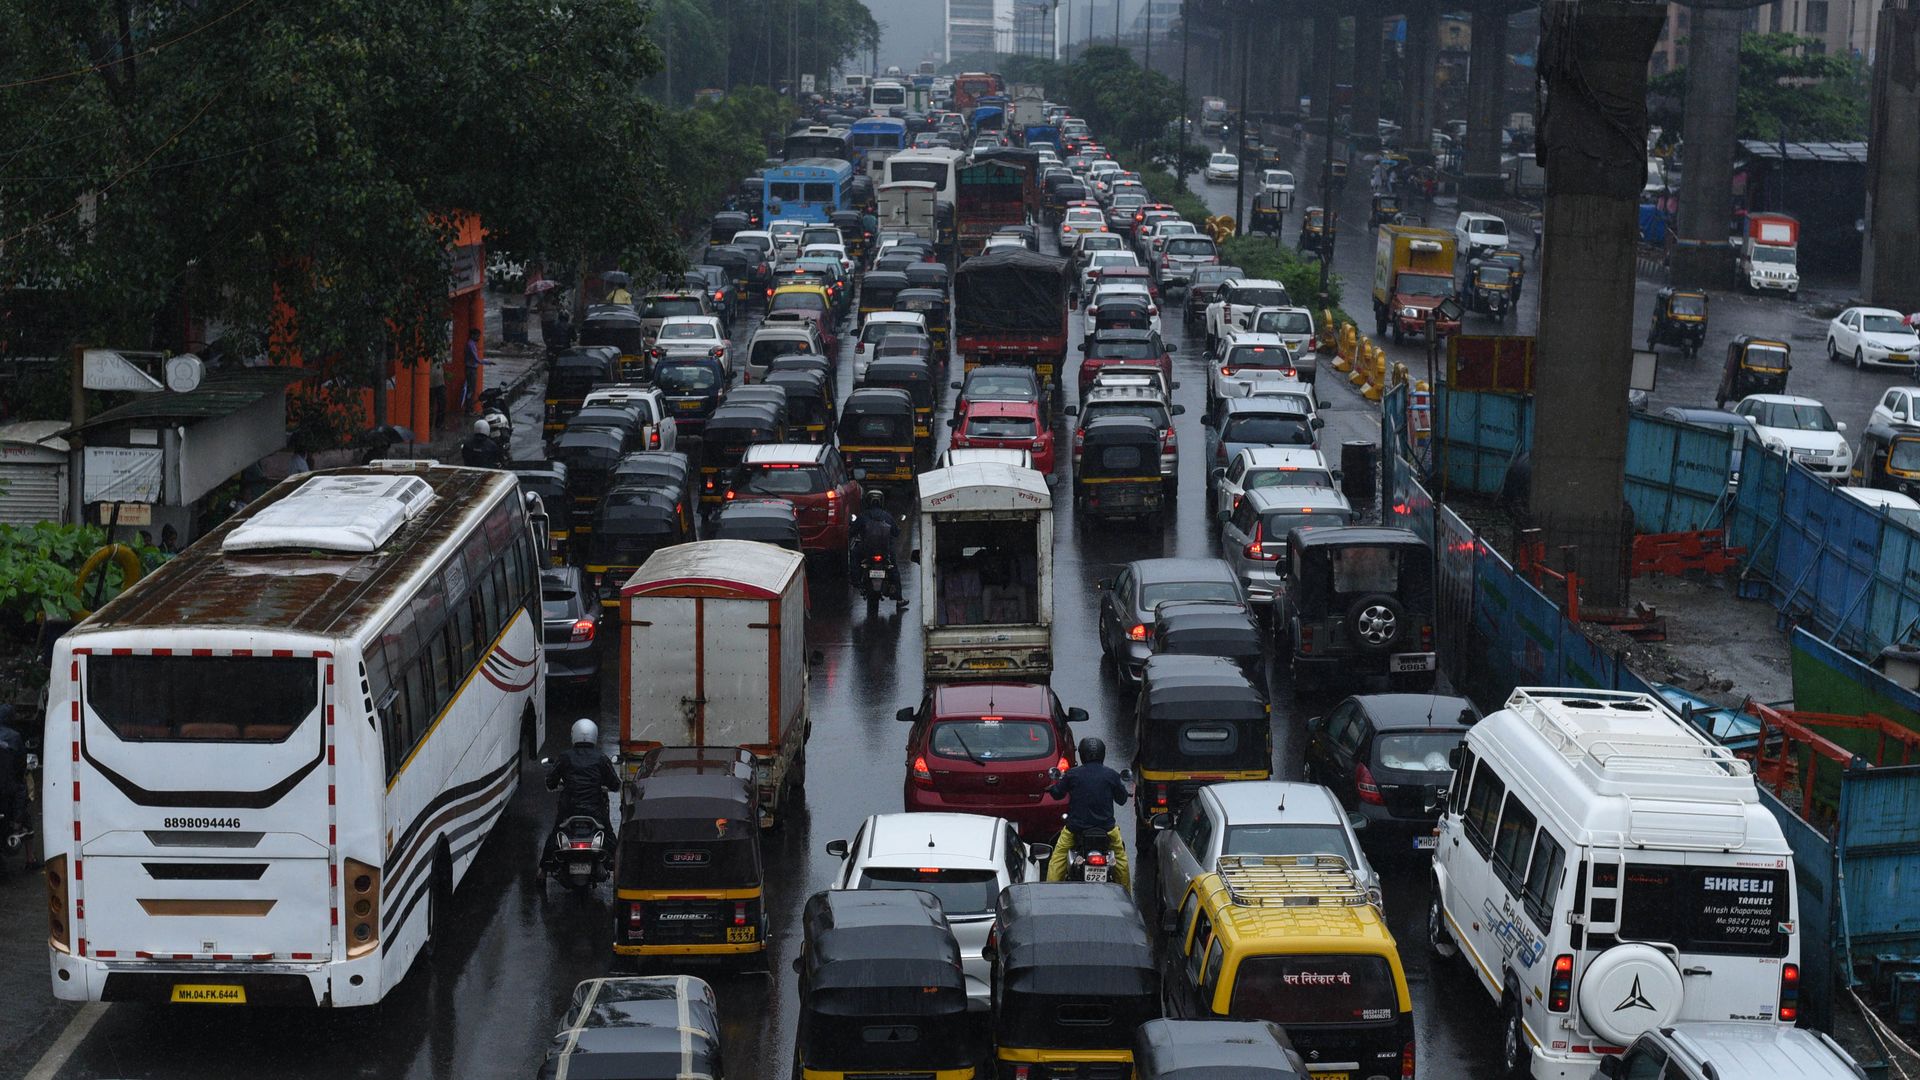 A rainy traffic jam in India